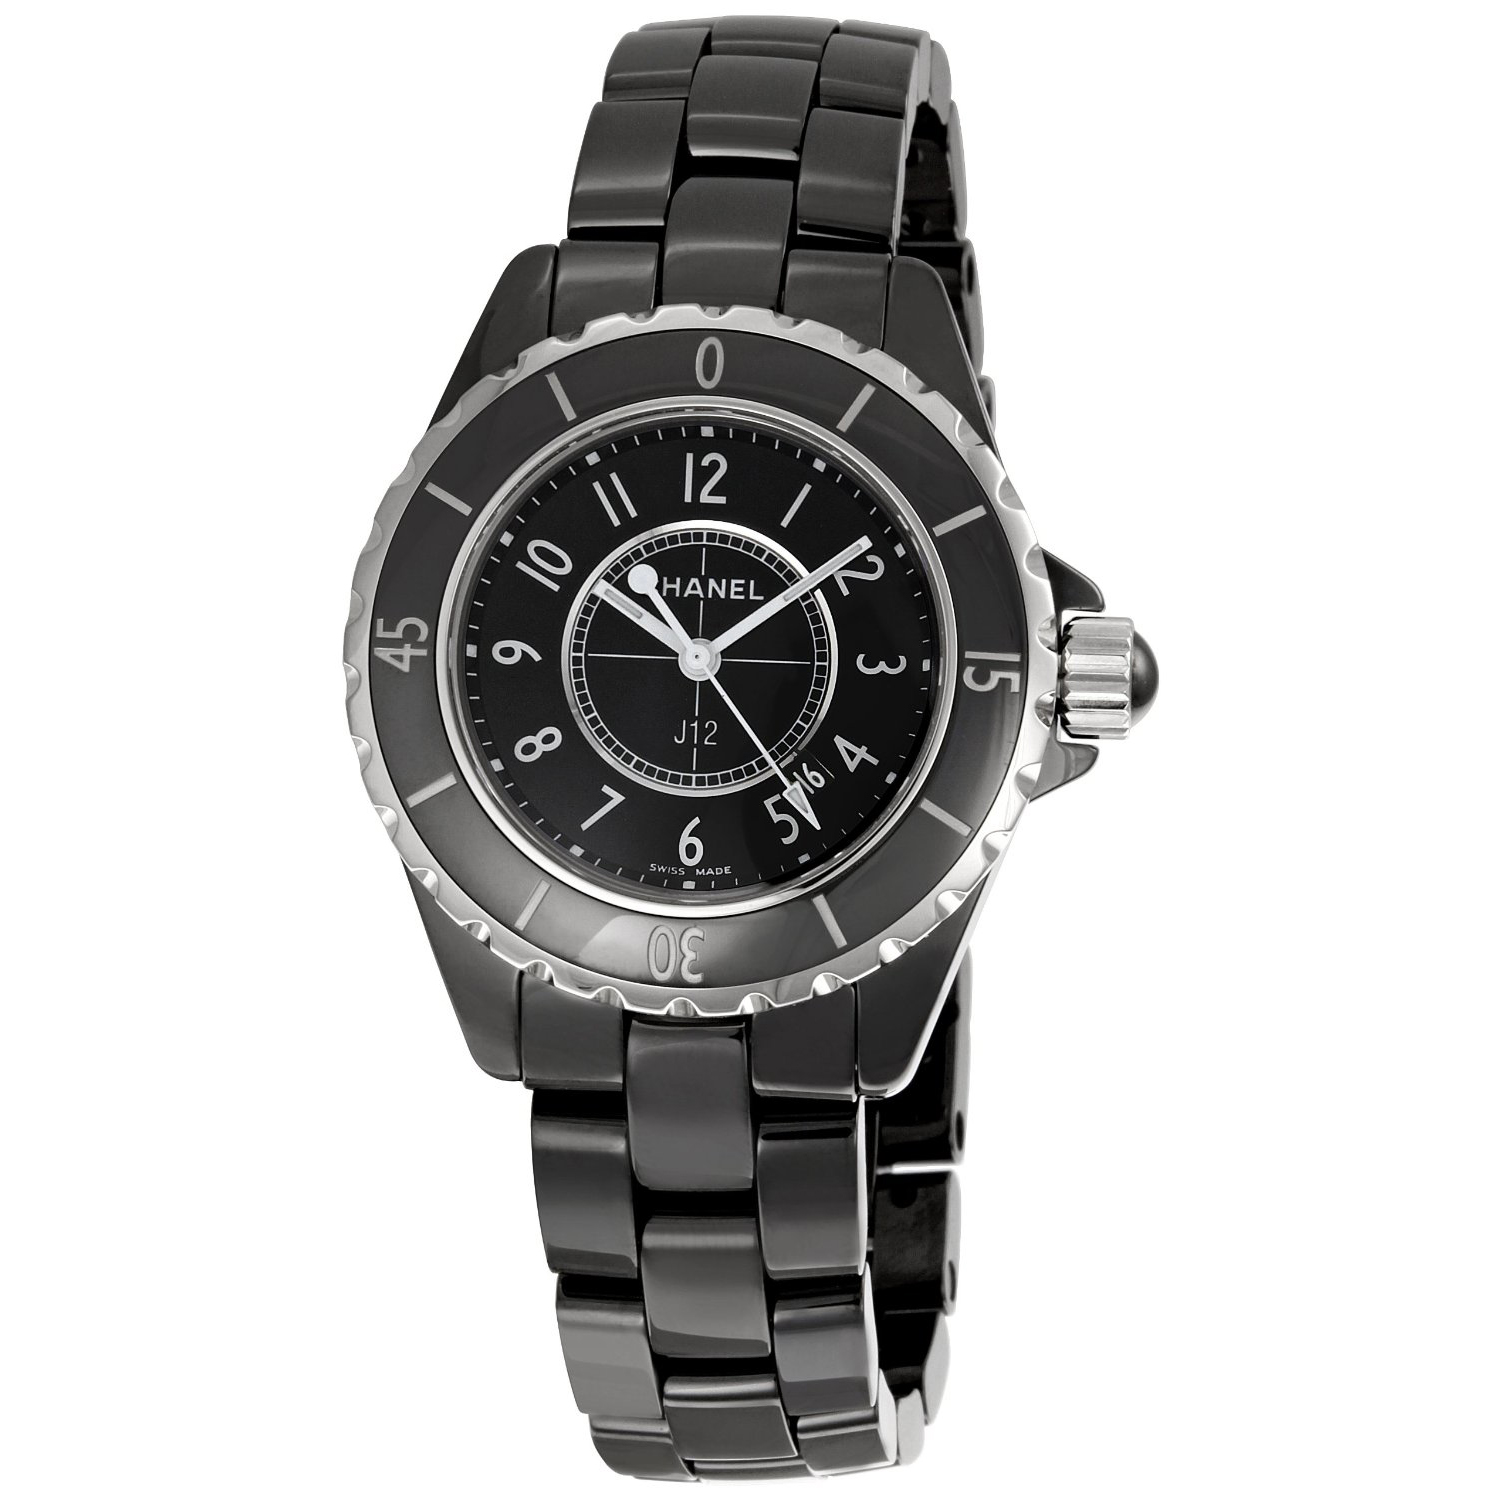 Chanel Women's H0682 J12 Black Dial Watch  $3,999.00(24%off) + Free Shipping 